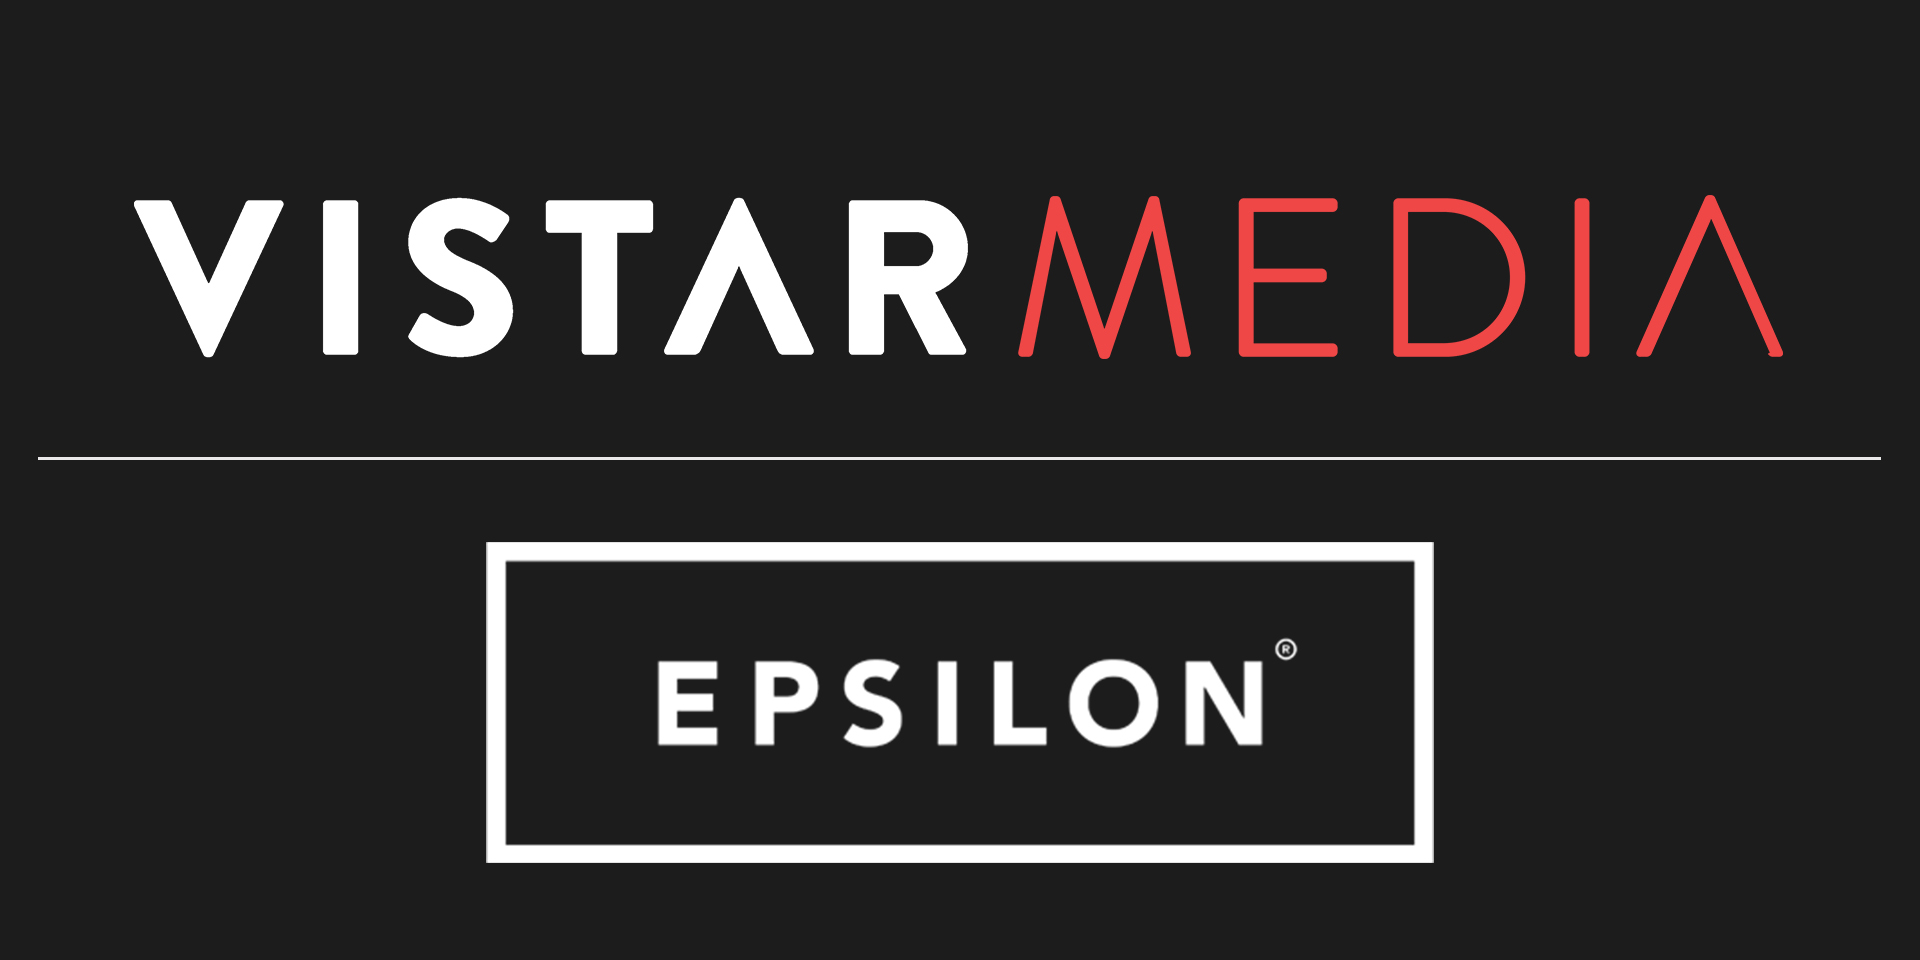 Epsilon partners with Vistar Media